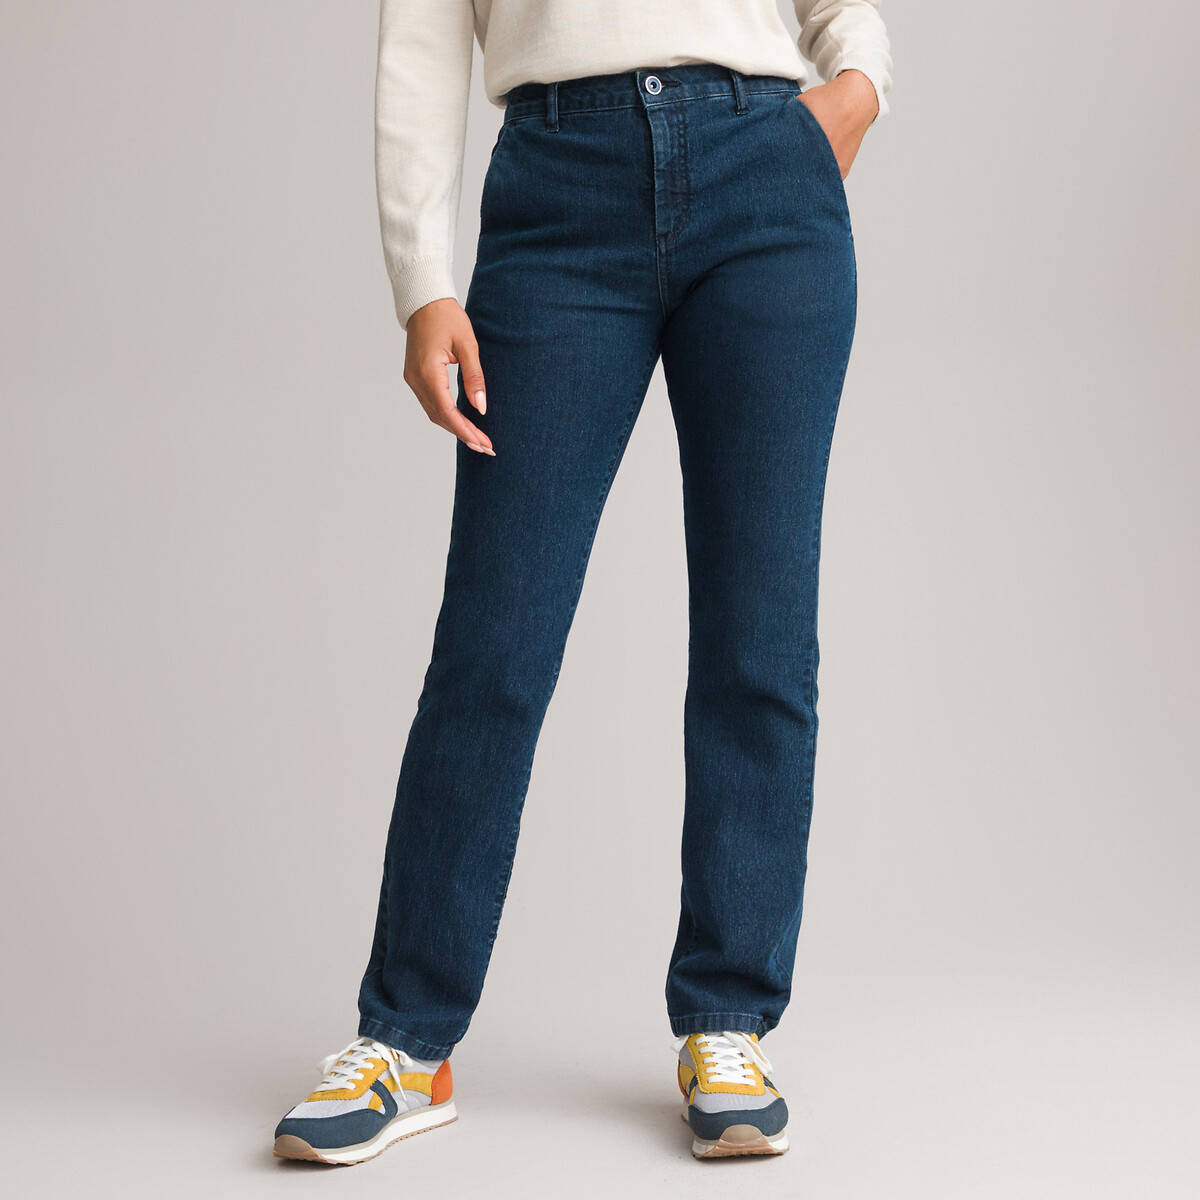 Straight Stretch Denim Jeans, Length 30.5"